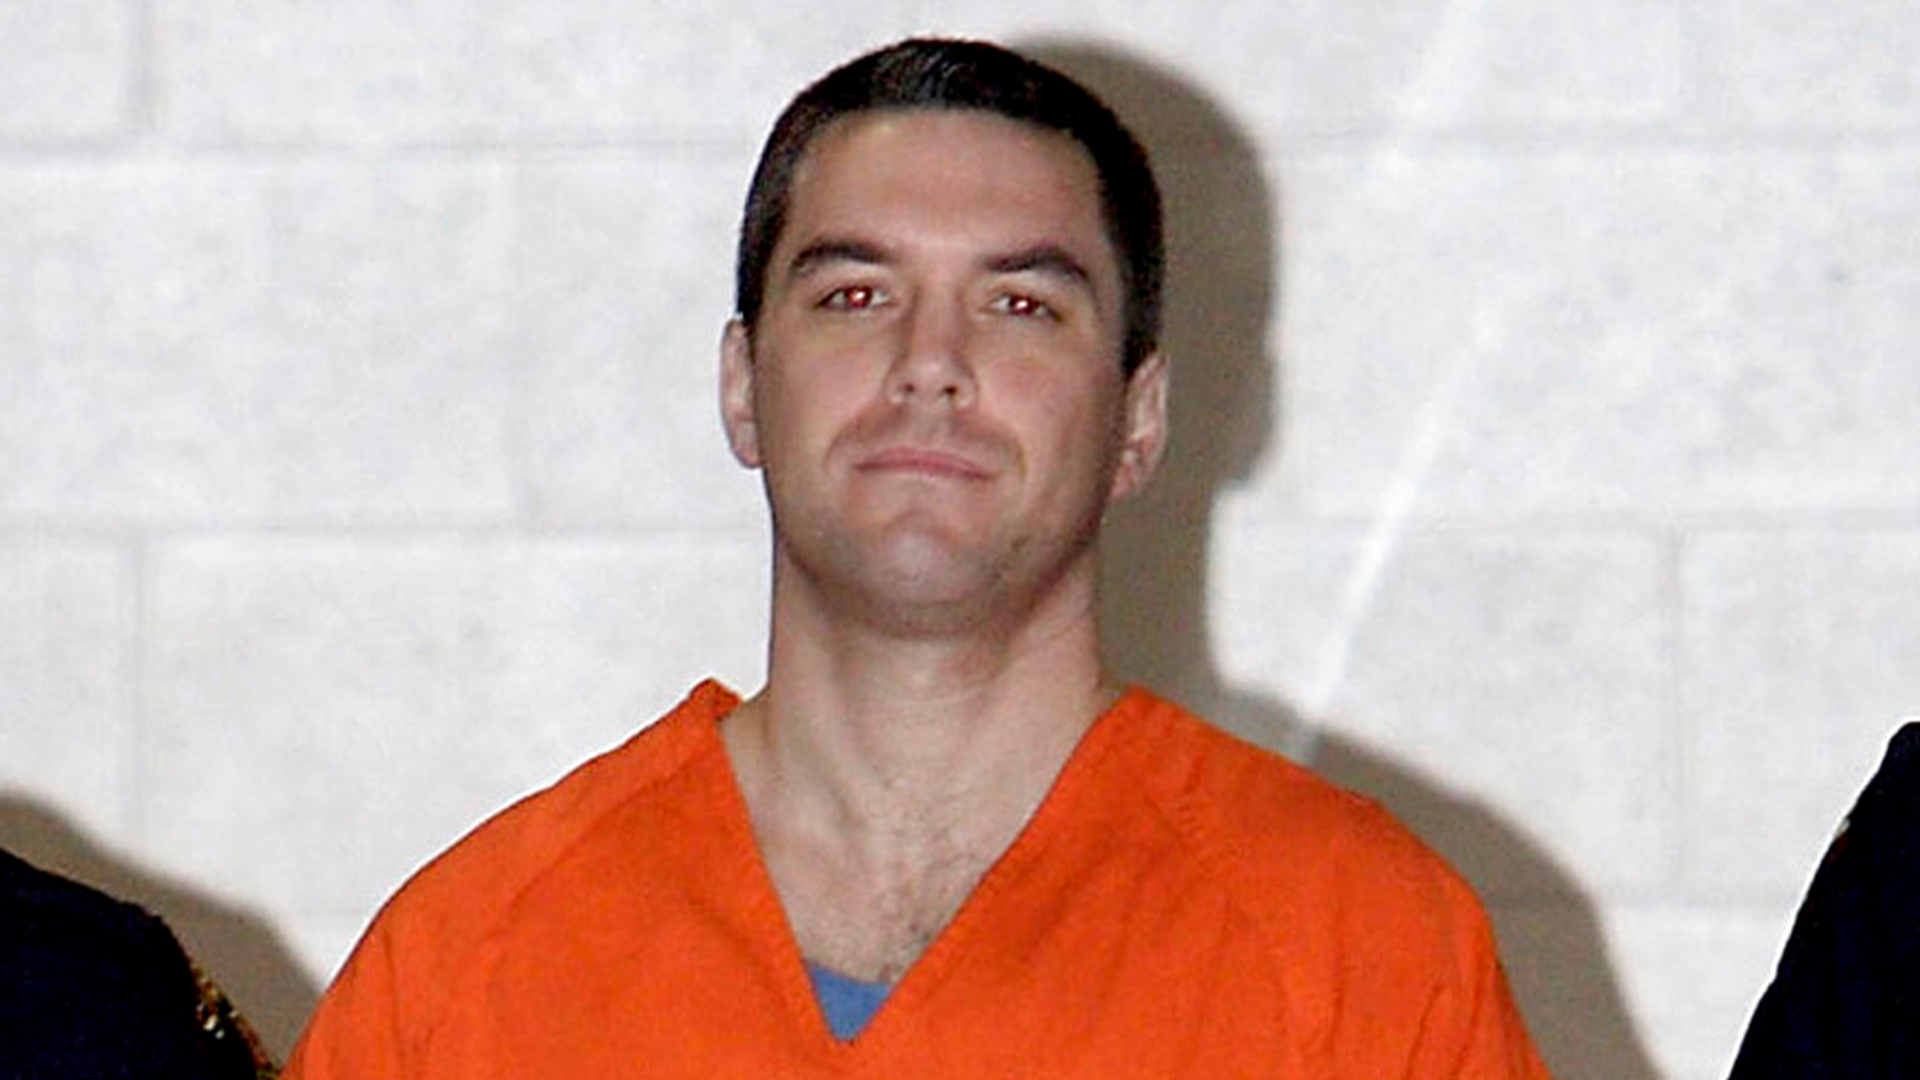 Scott Peterson Being Re-Sentenced For Murder